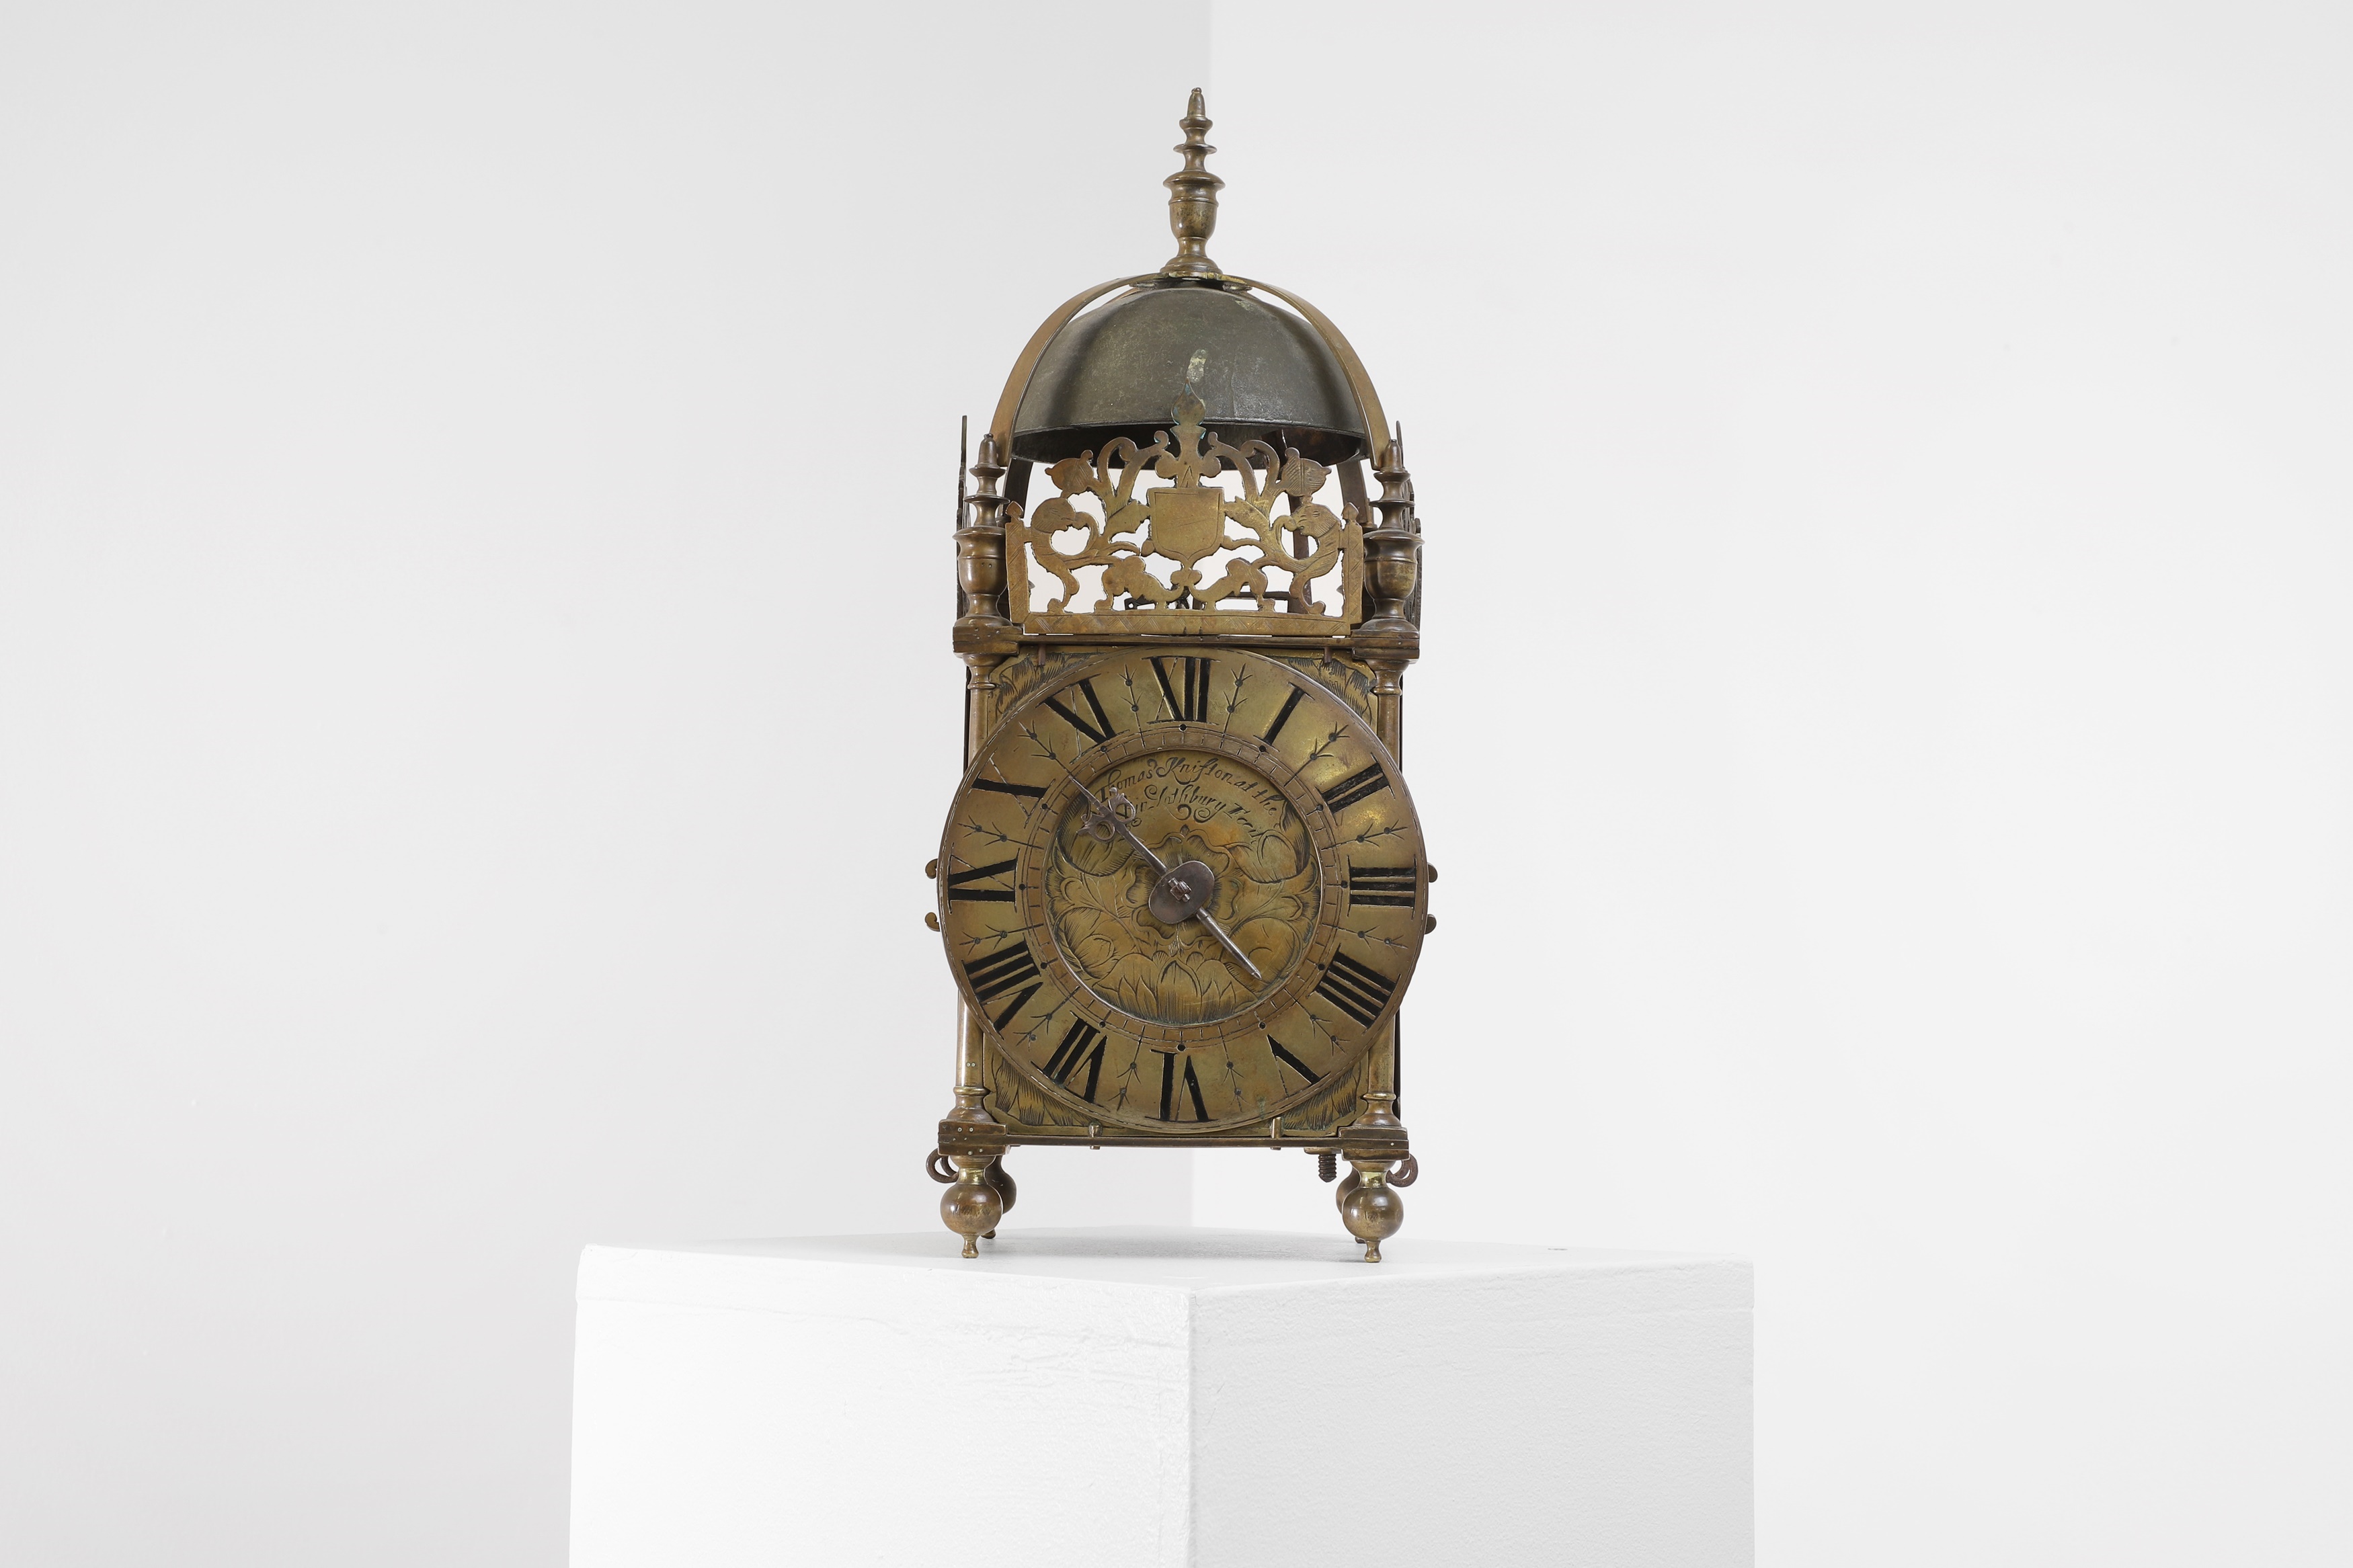 A brass lantern clock last quarter of the 17th century (£2,000-3,000)